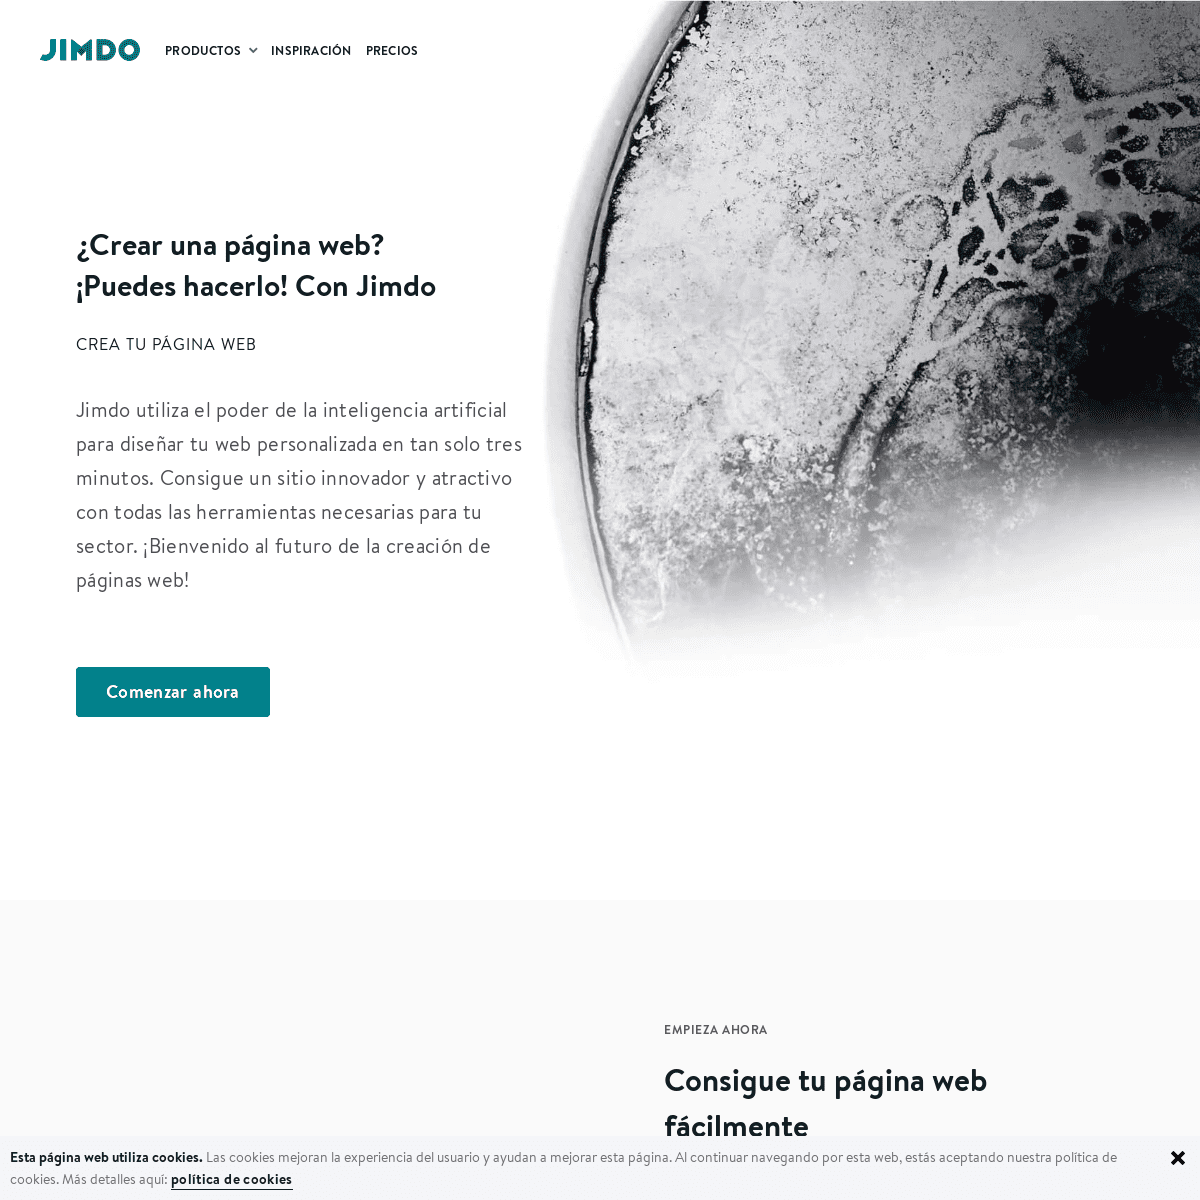 A complete backup of es.jimdo.com